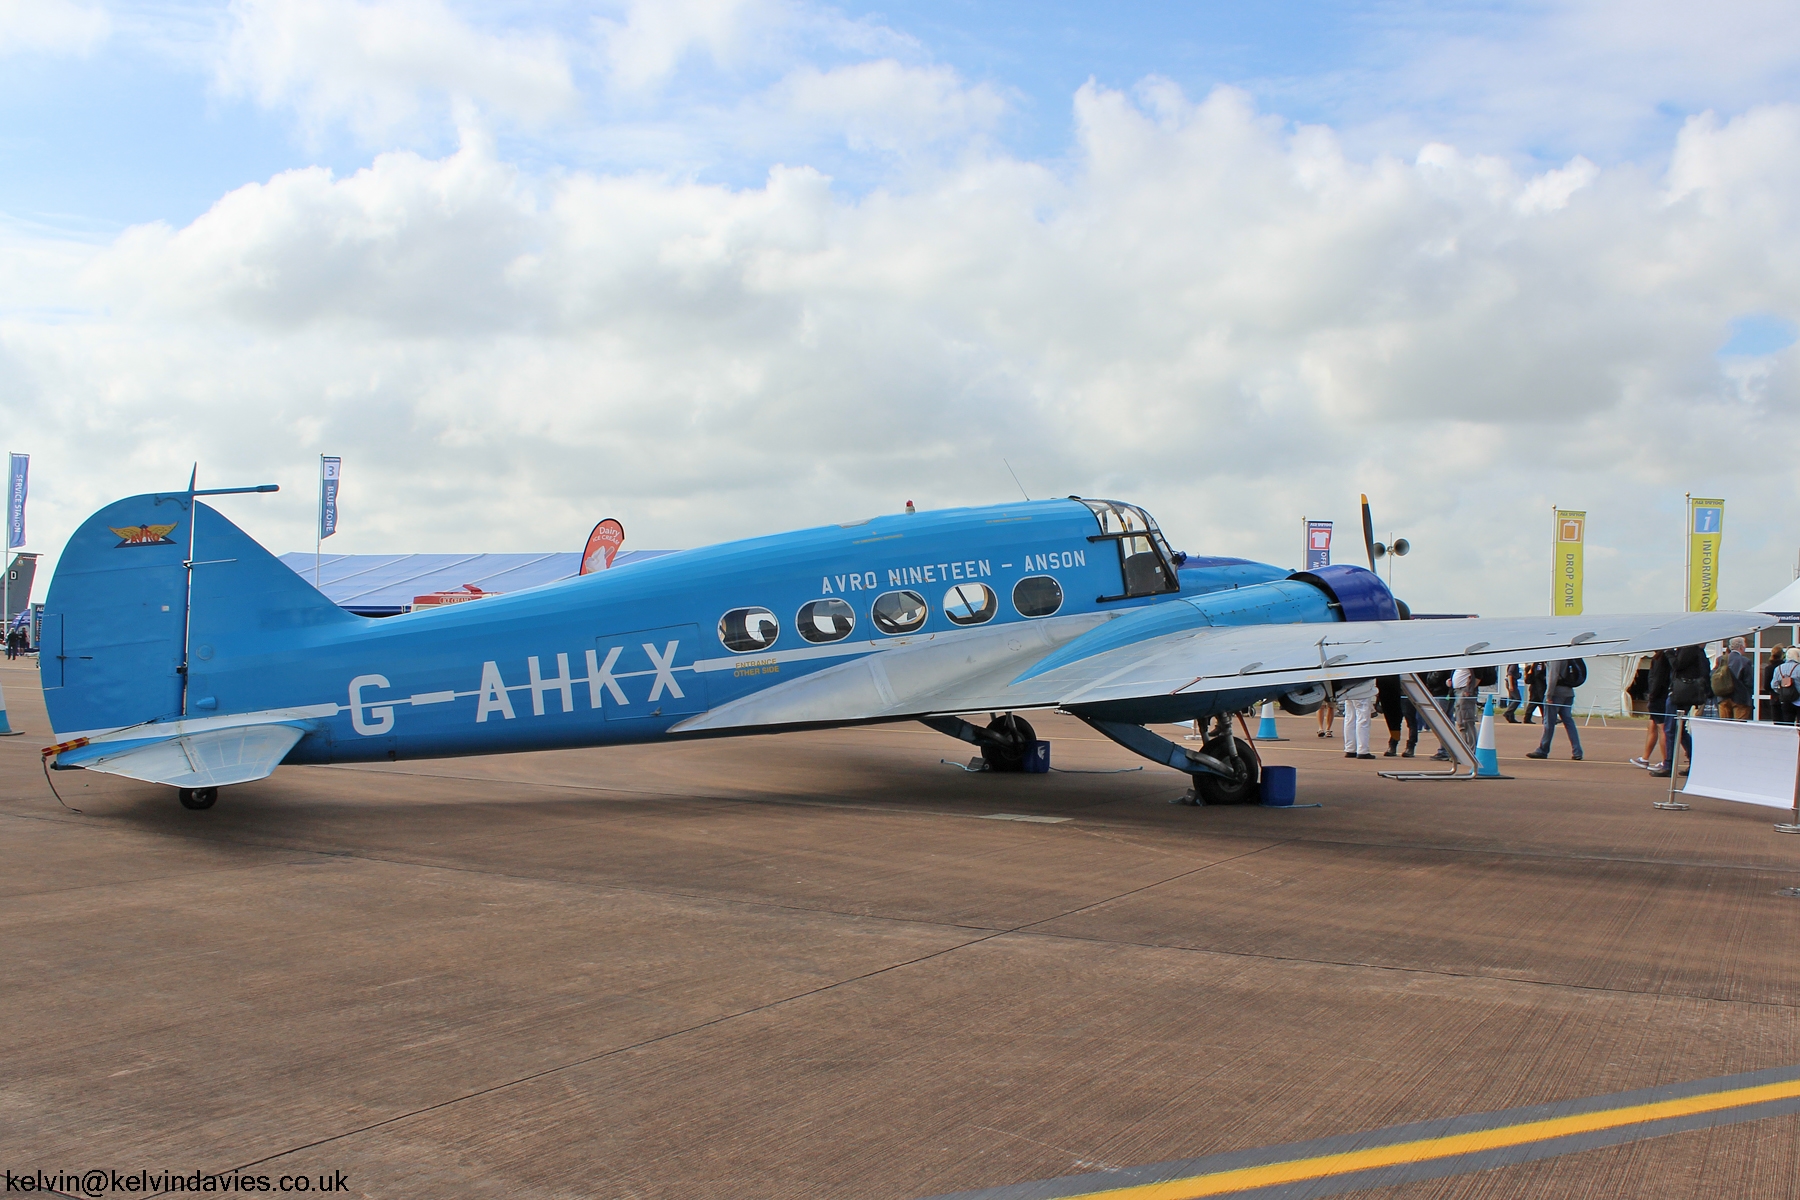 BAE Systems Heritage Flight Avro Anson C19 G-AHKX